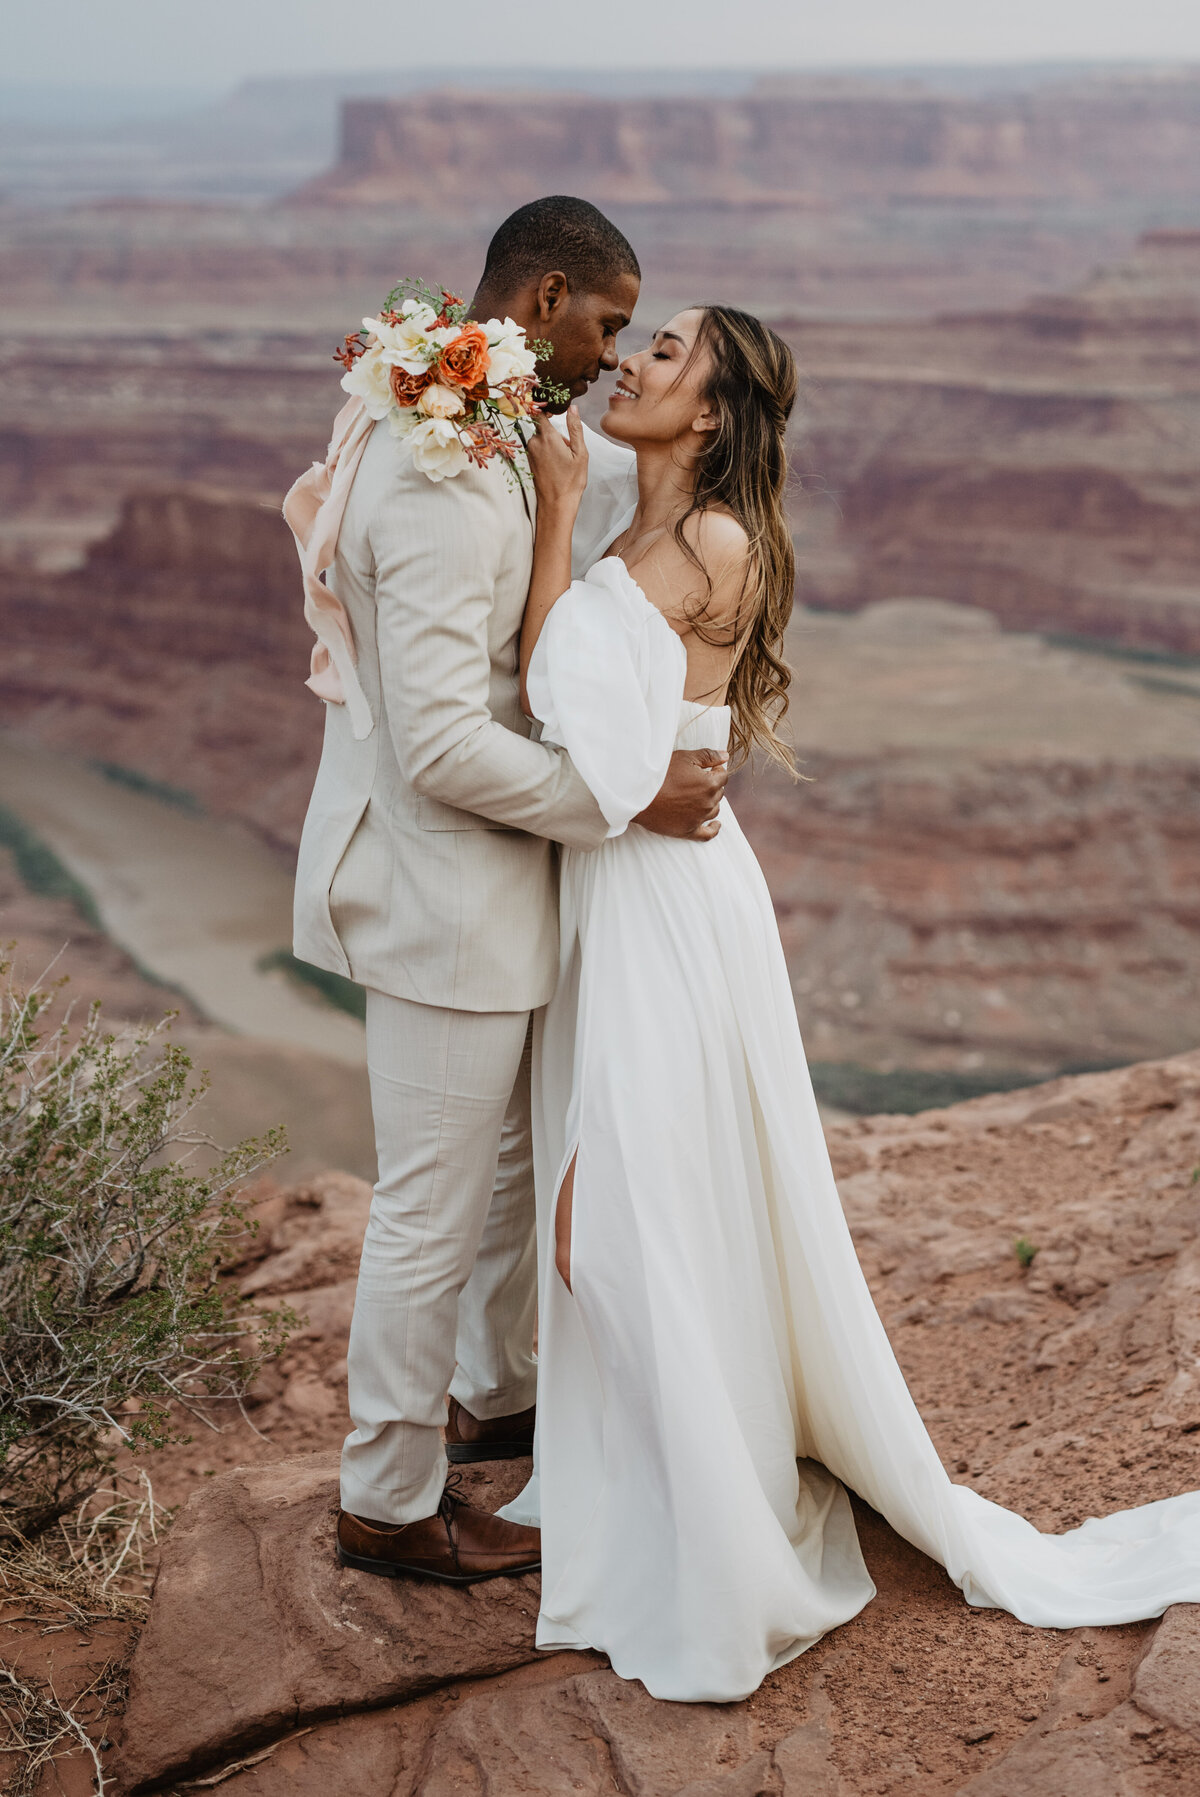 Utah Elopement Photographer captures couple kissing on red rocks